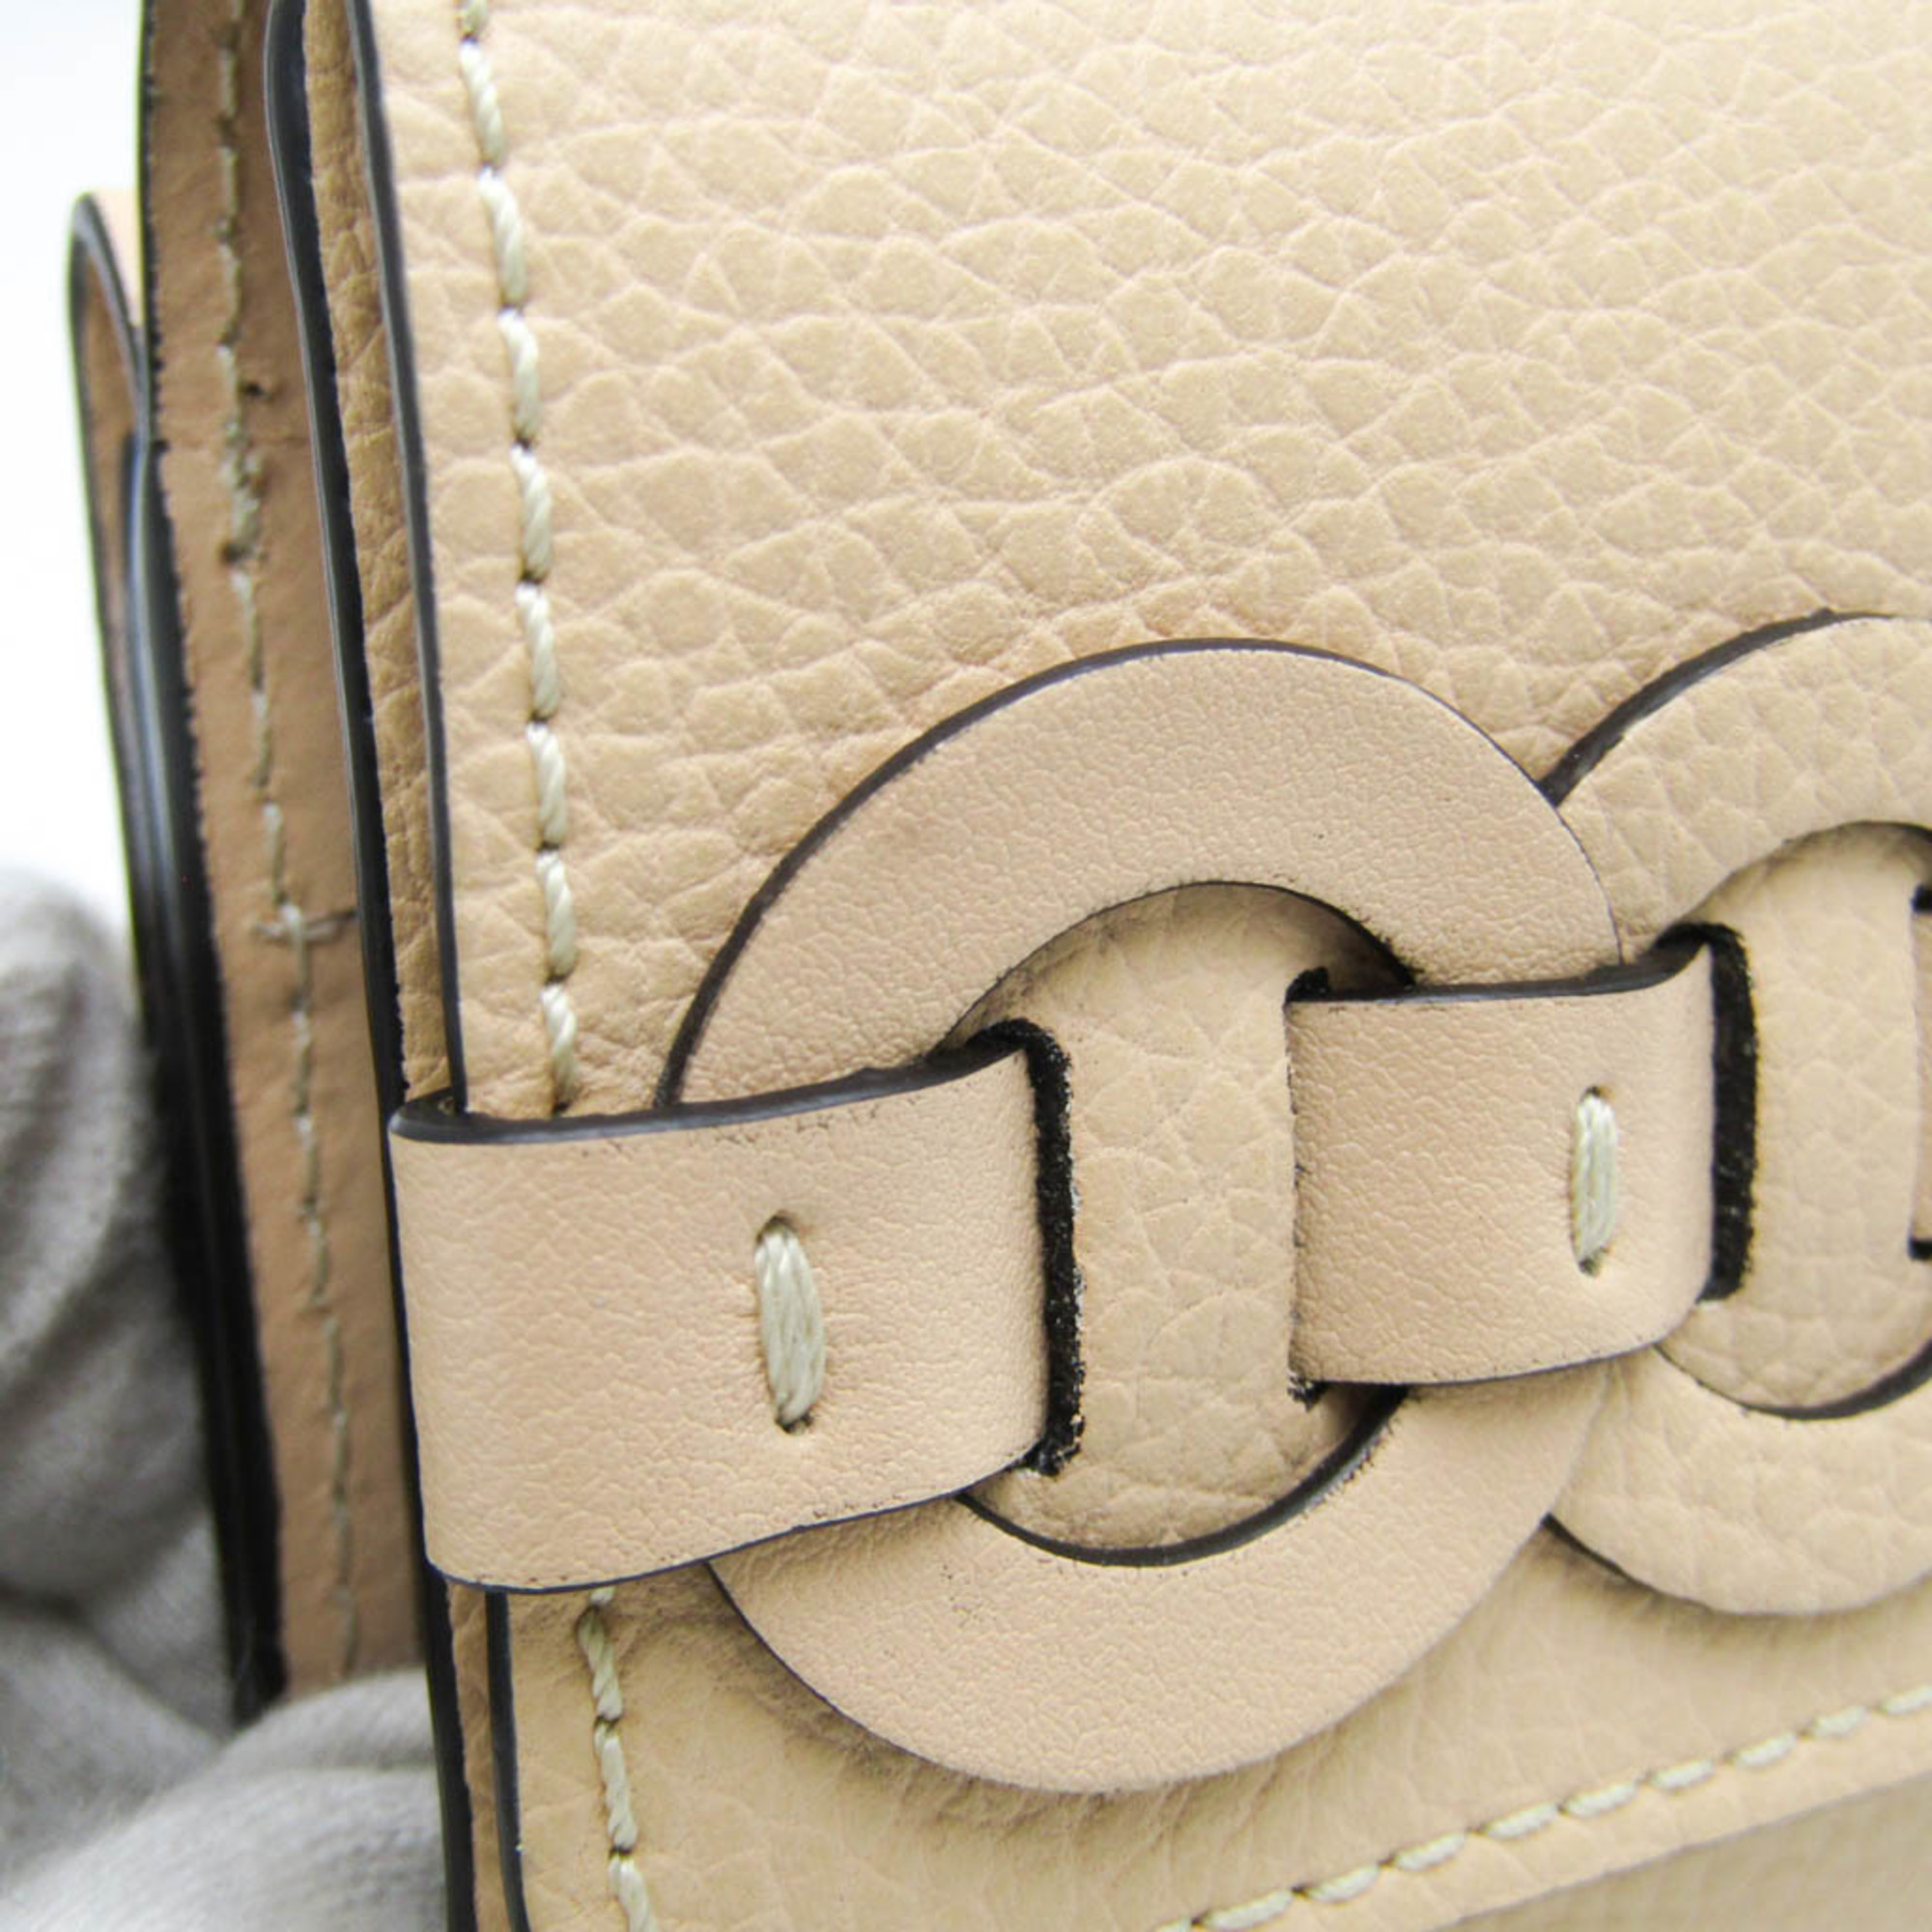 Chloé Darryl CHC21UP117E04 Women's Leather Wallet (tri-fold) Light Beige